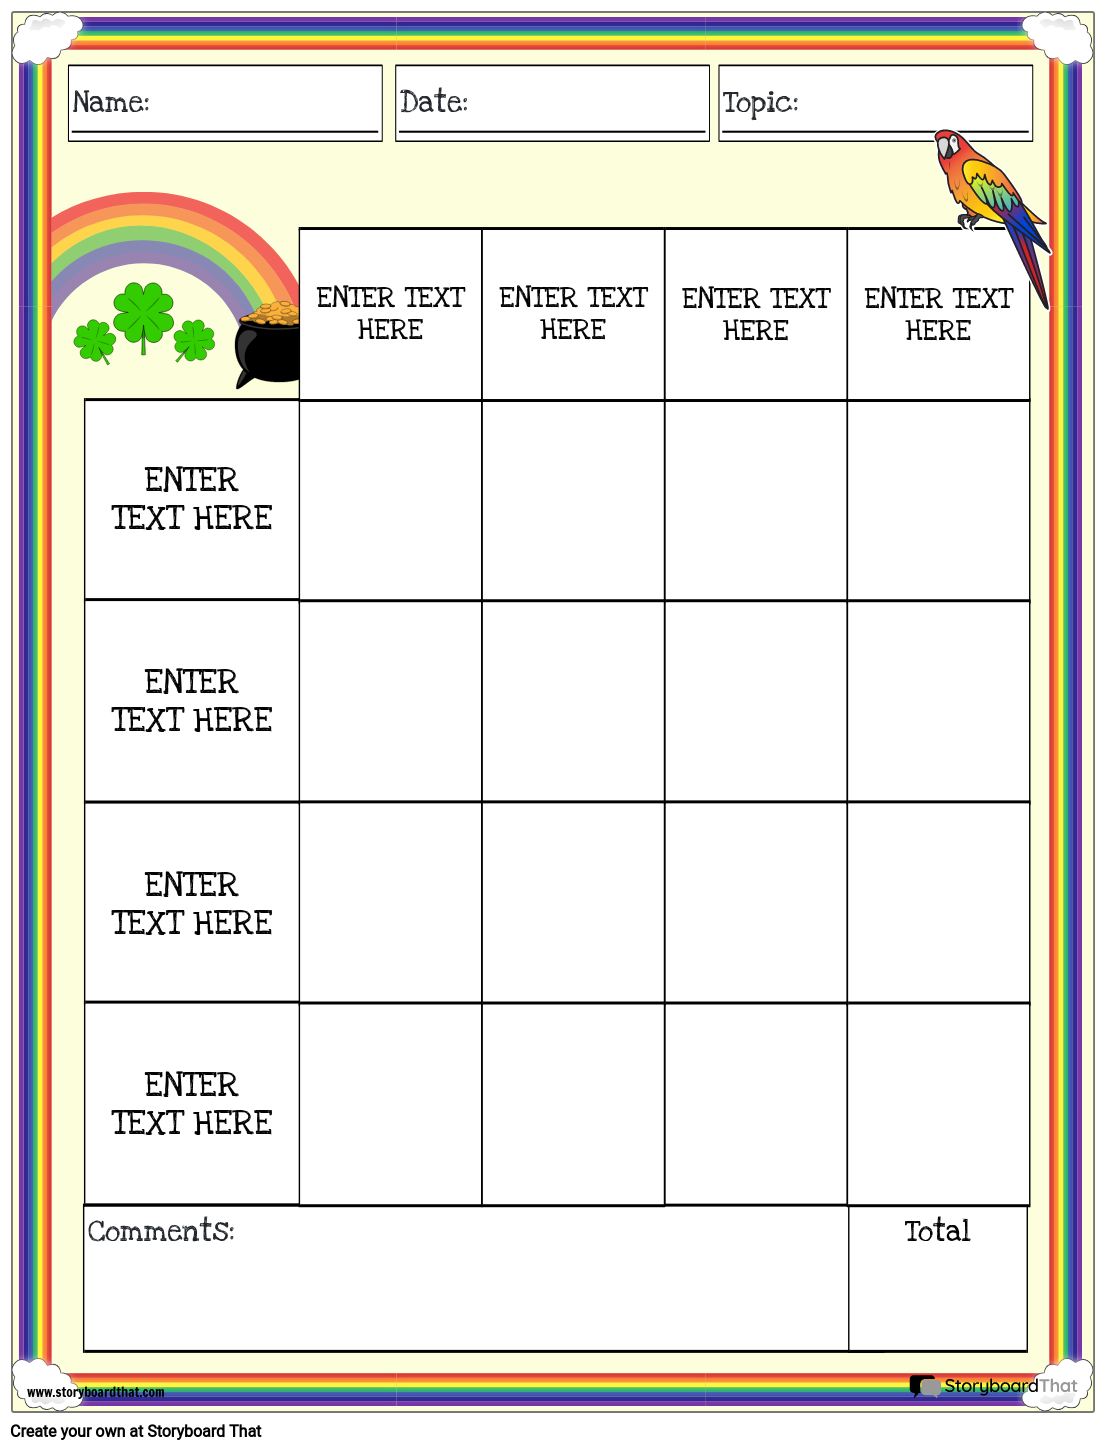 Colorful Rainbow Themed Rubric Worksheet Design